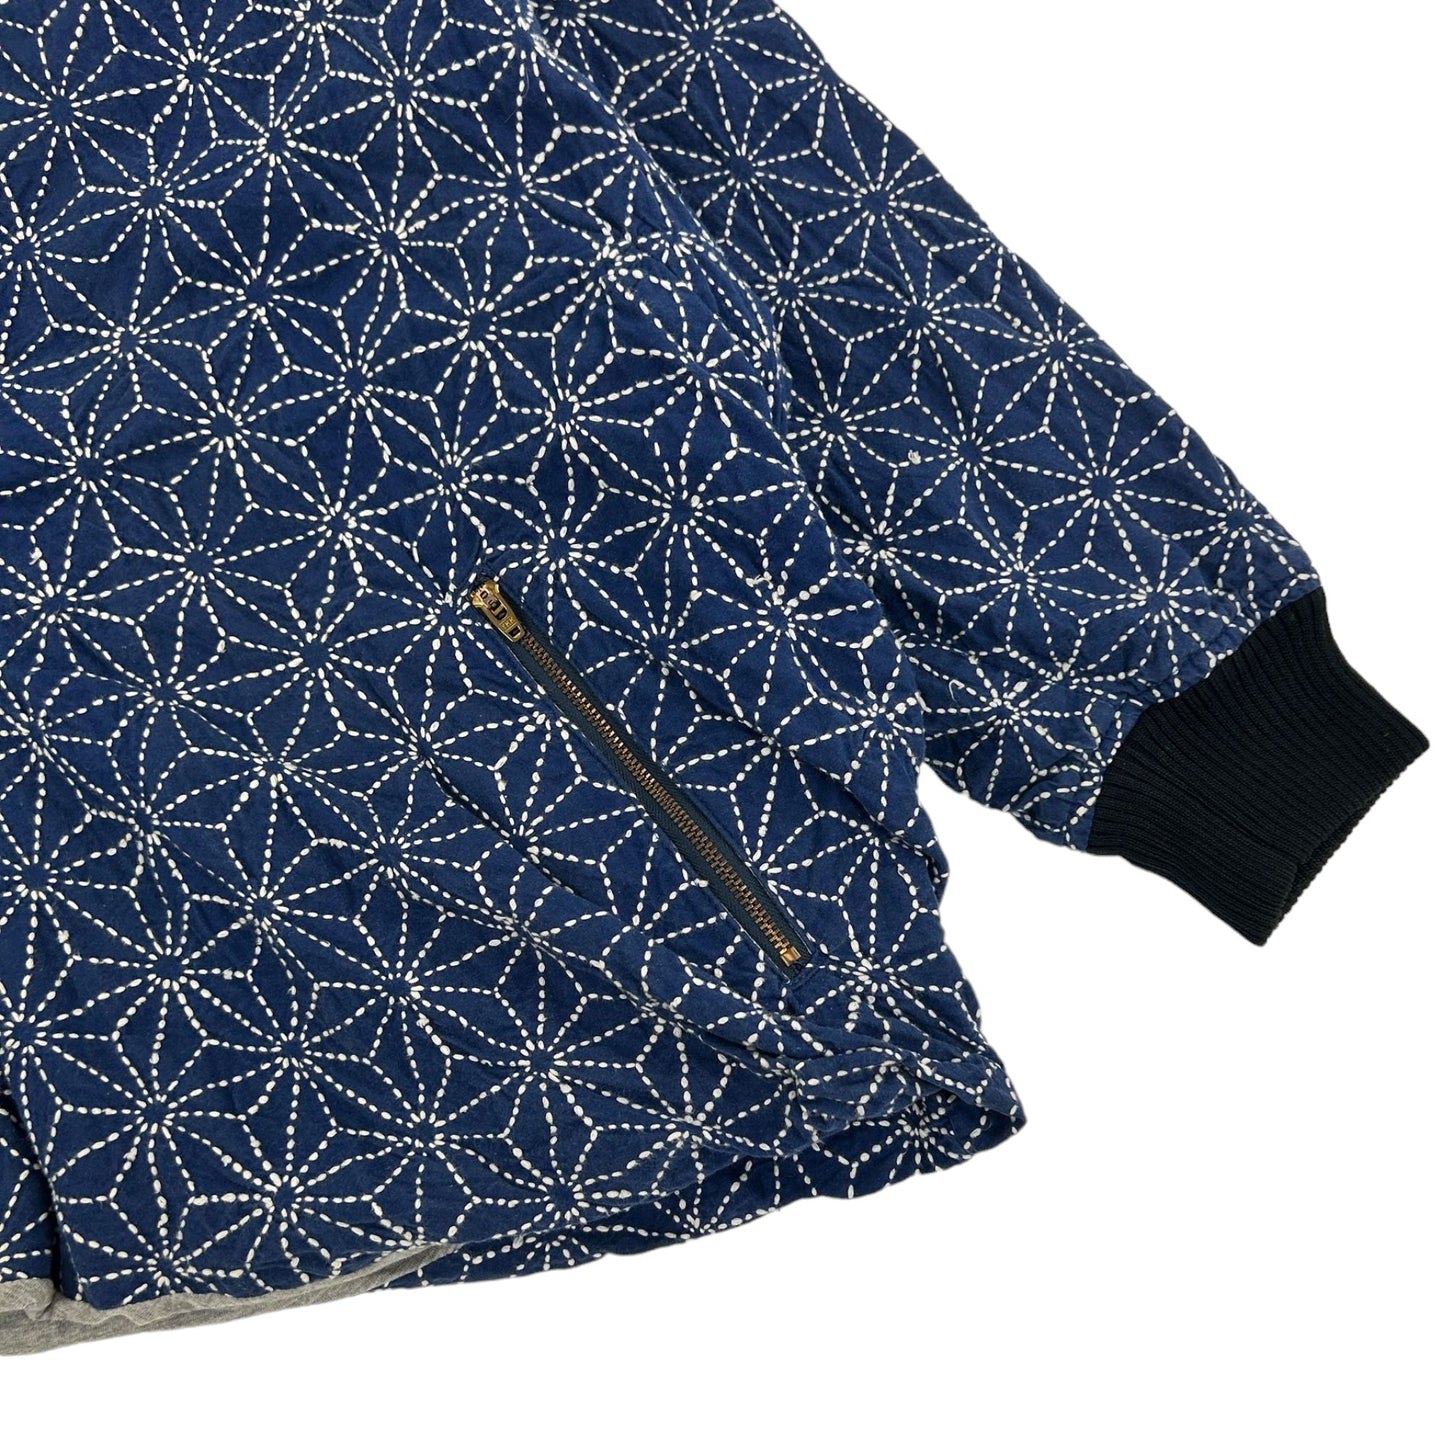 Vintage Frapbois By Issey Miyake Patterned Reversible Jacket Size S